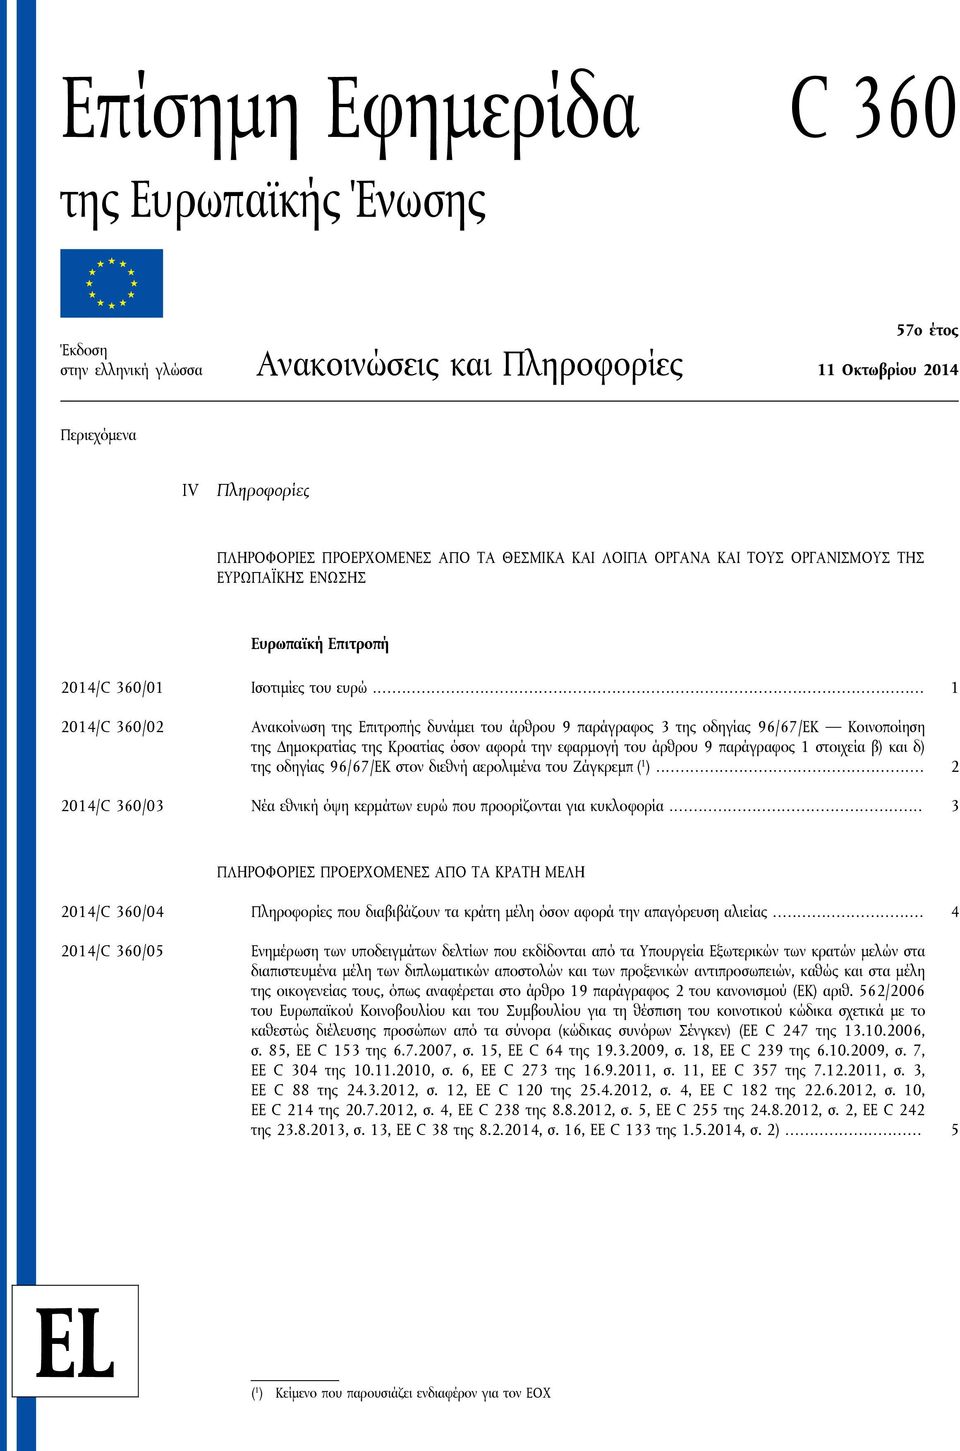 .. 1 2014/C 360/02 Ανακοίνωση της Επιτροπής δυνάμει του άρθρου 9 παράγραφος 3 της οδηγίας 96/67/ΕΚ Κοινοποίηση της Δημοκρατίας της Κροατίας όσον αφορά την εφαρμογή του άρθρου 9 παράγραφος 1 στοιχεία